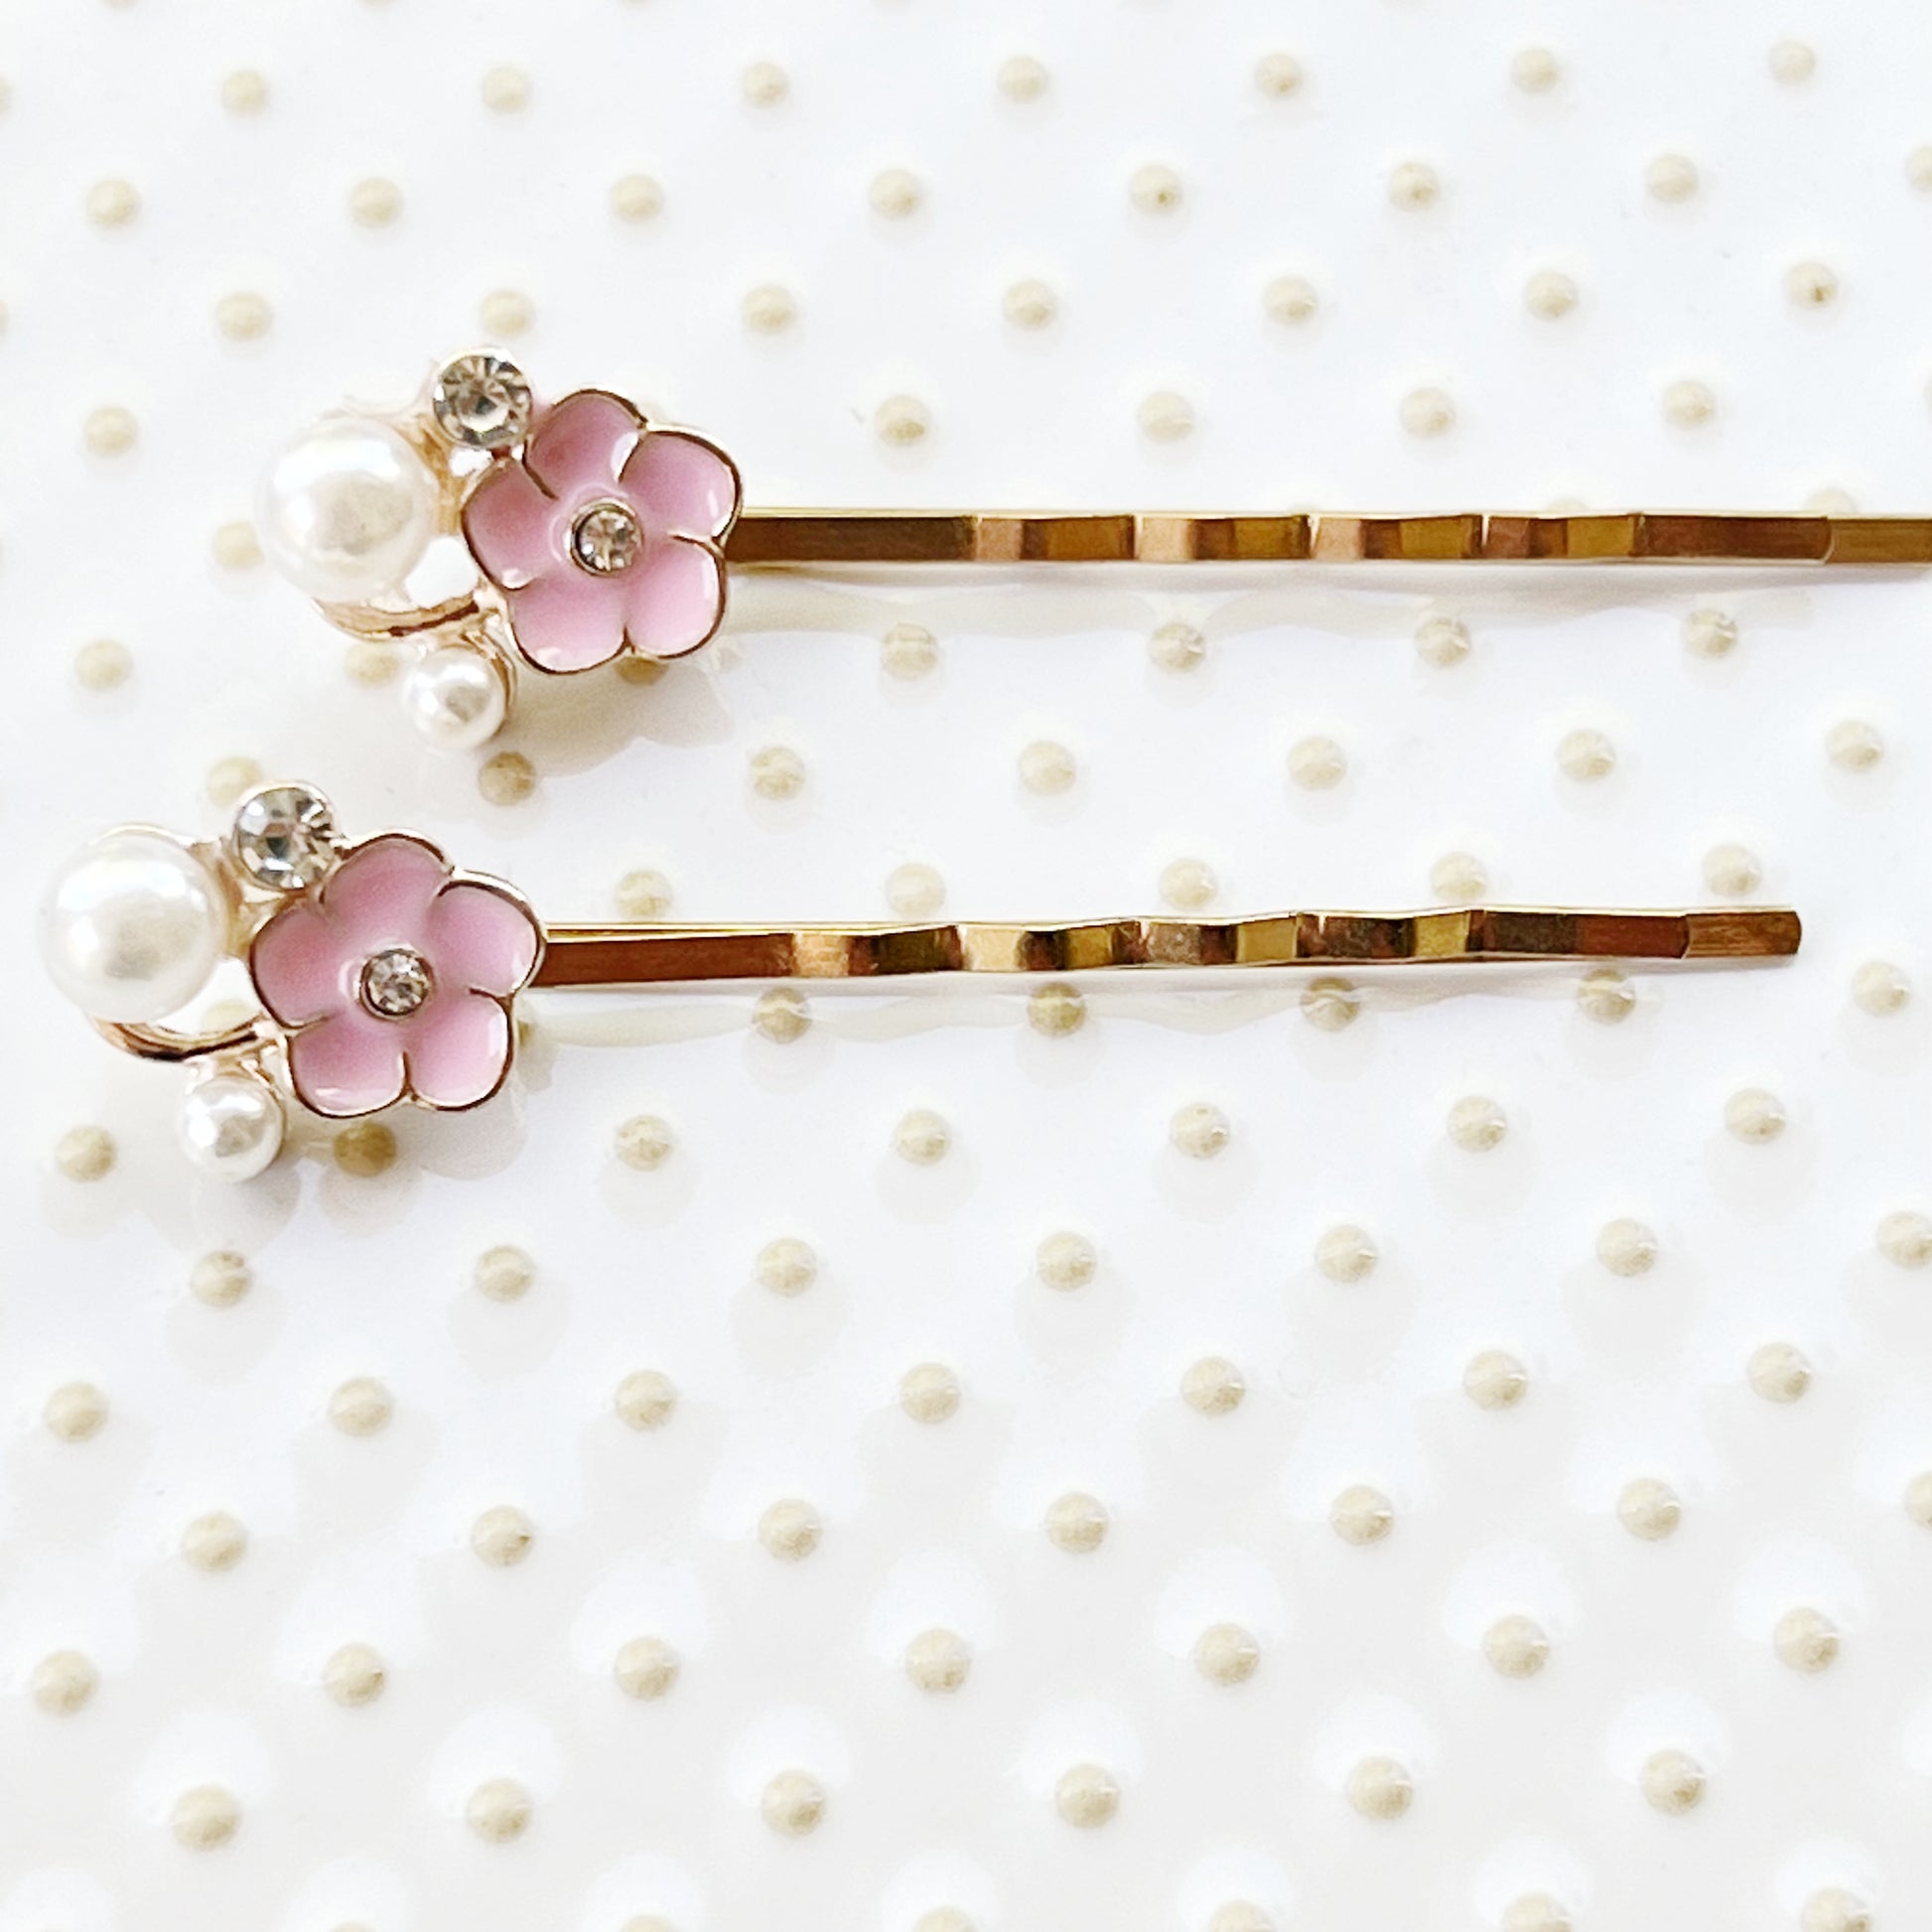 Pink Pearl & Rhinestone Flower Hair Pins: Decorative Boho Accessories for Women